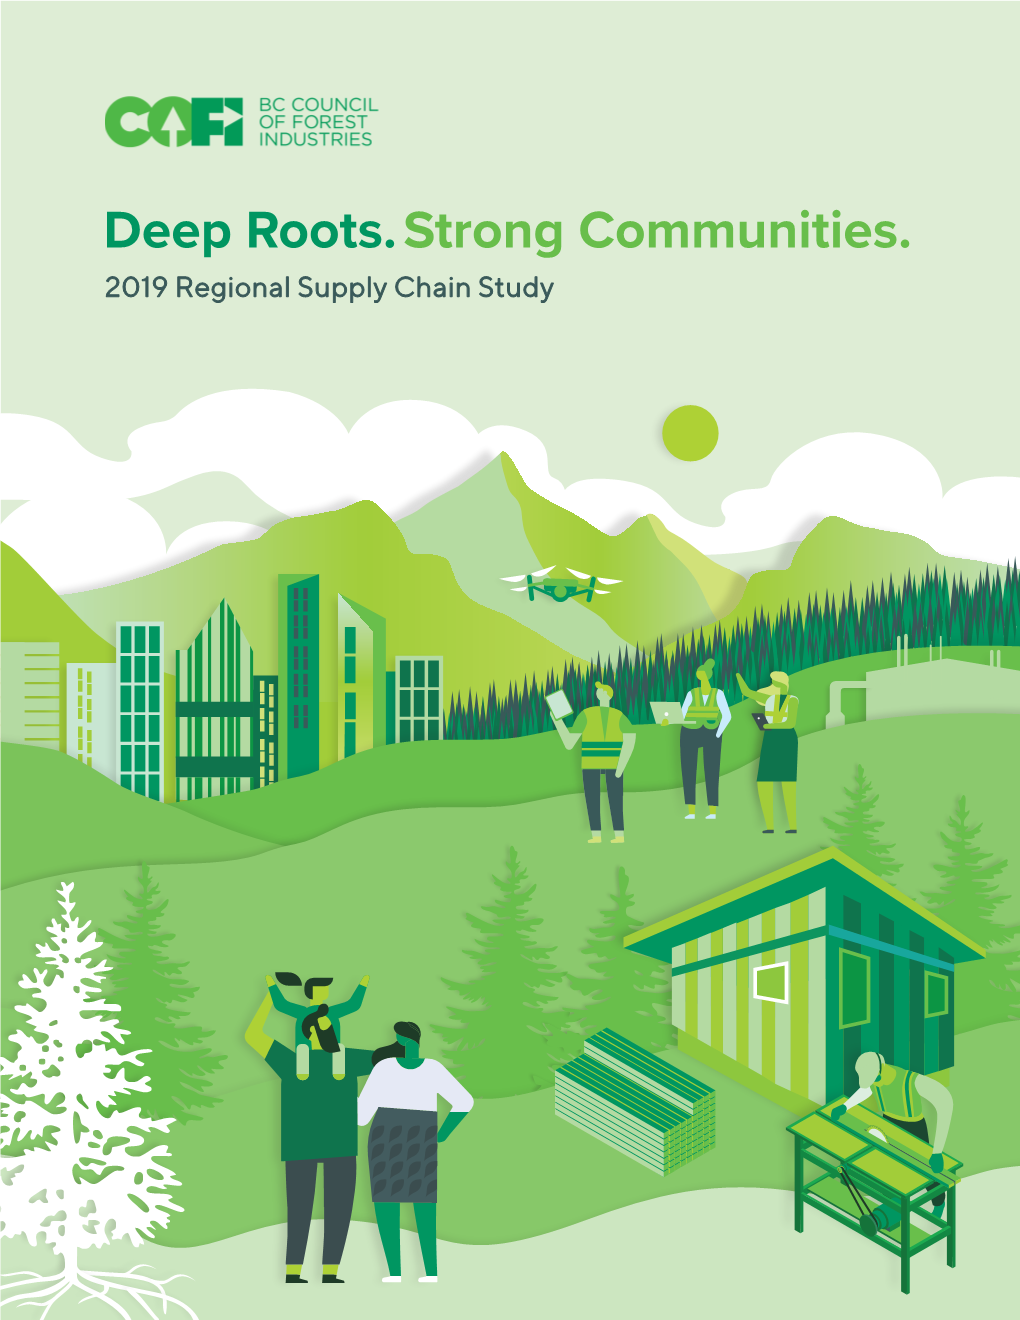 Deep Roots. Strong Communities. 2019 Regionaregionall Supply Chachainin Study